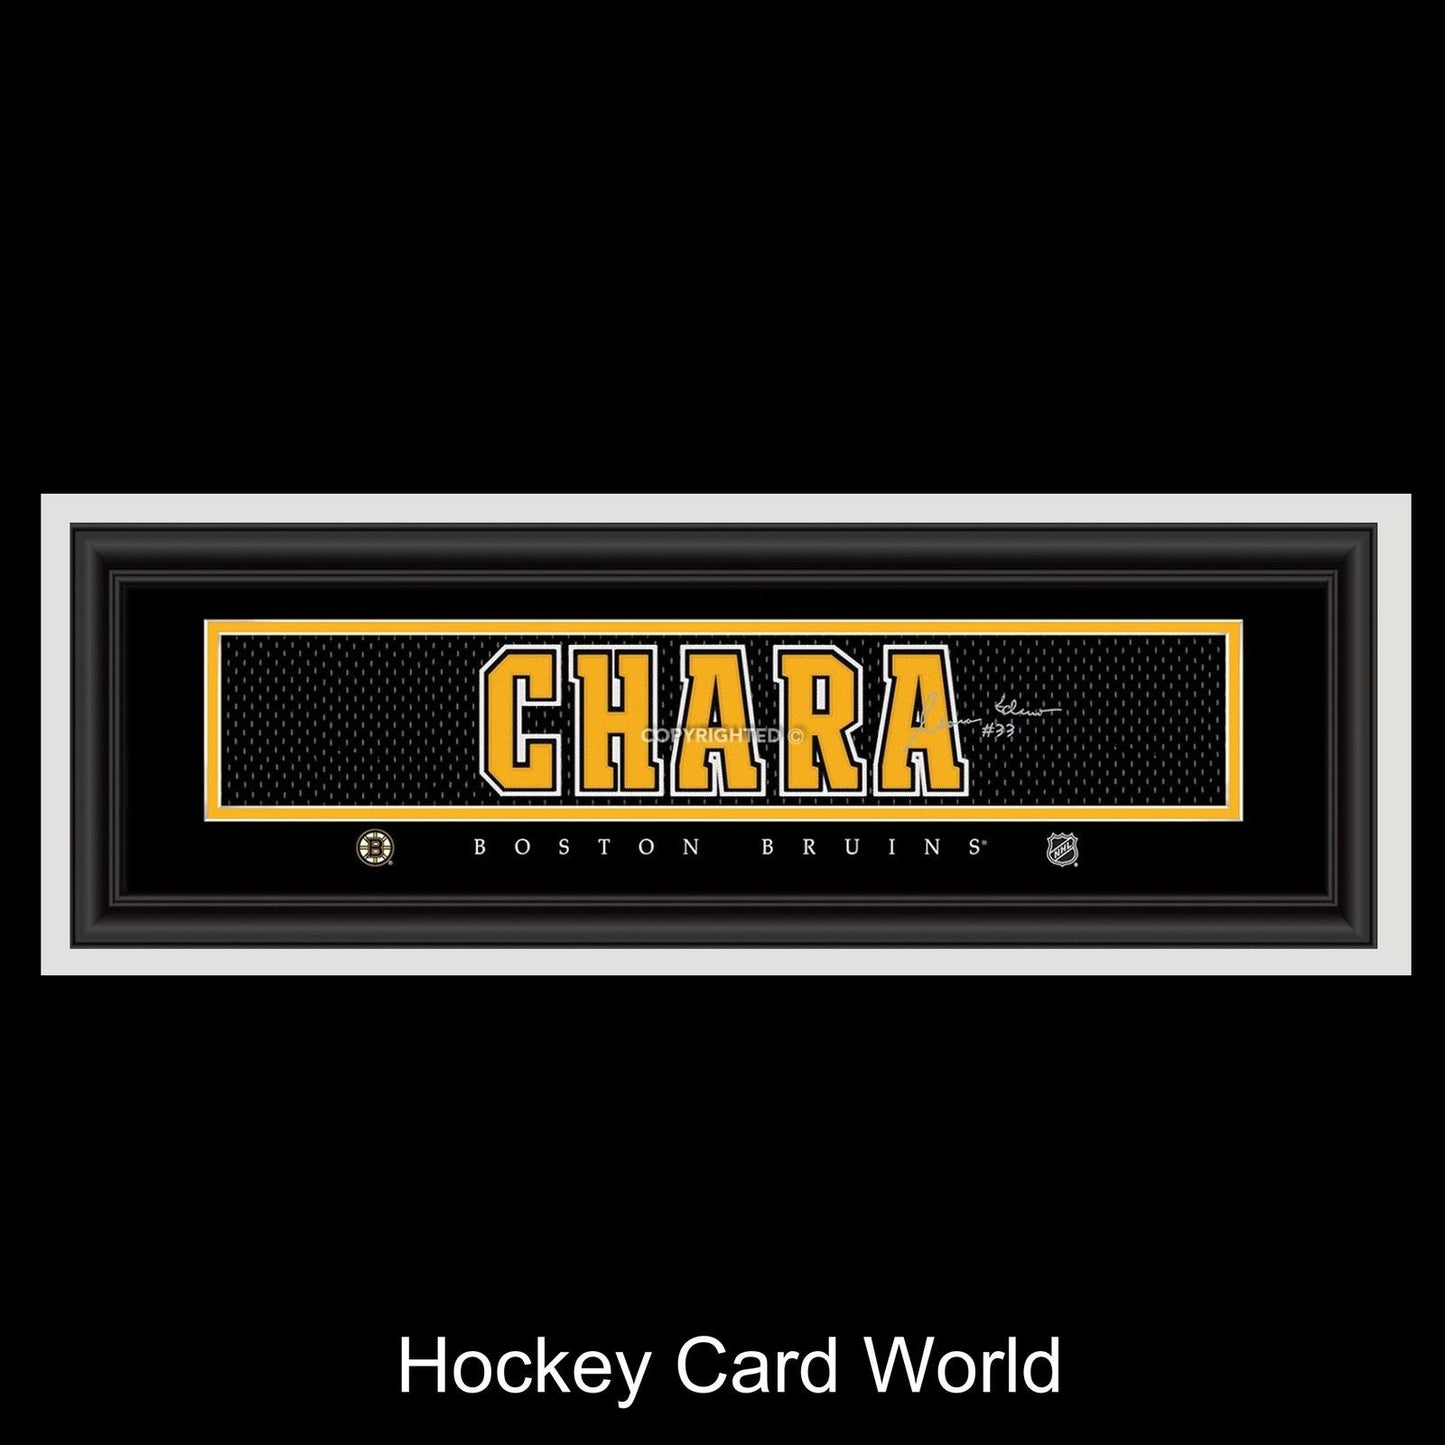 Medano Chara Boston Bruins FramedAuto  24x8 NHL Official Licensed